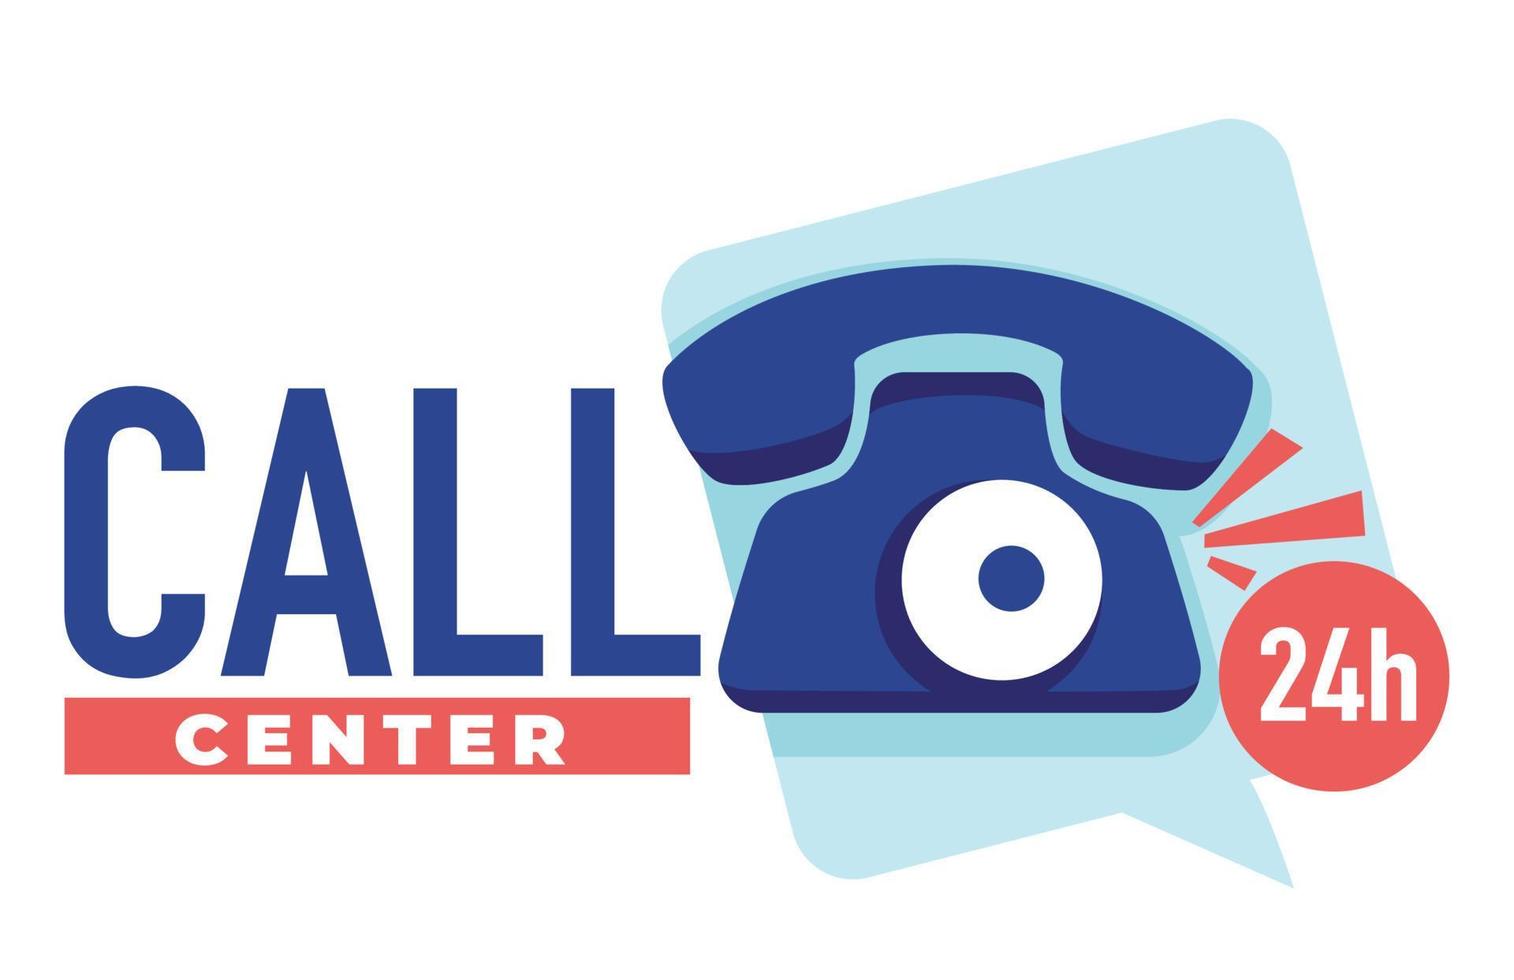 Call center 24 hours, hotline or helpdesk banner vector